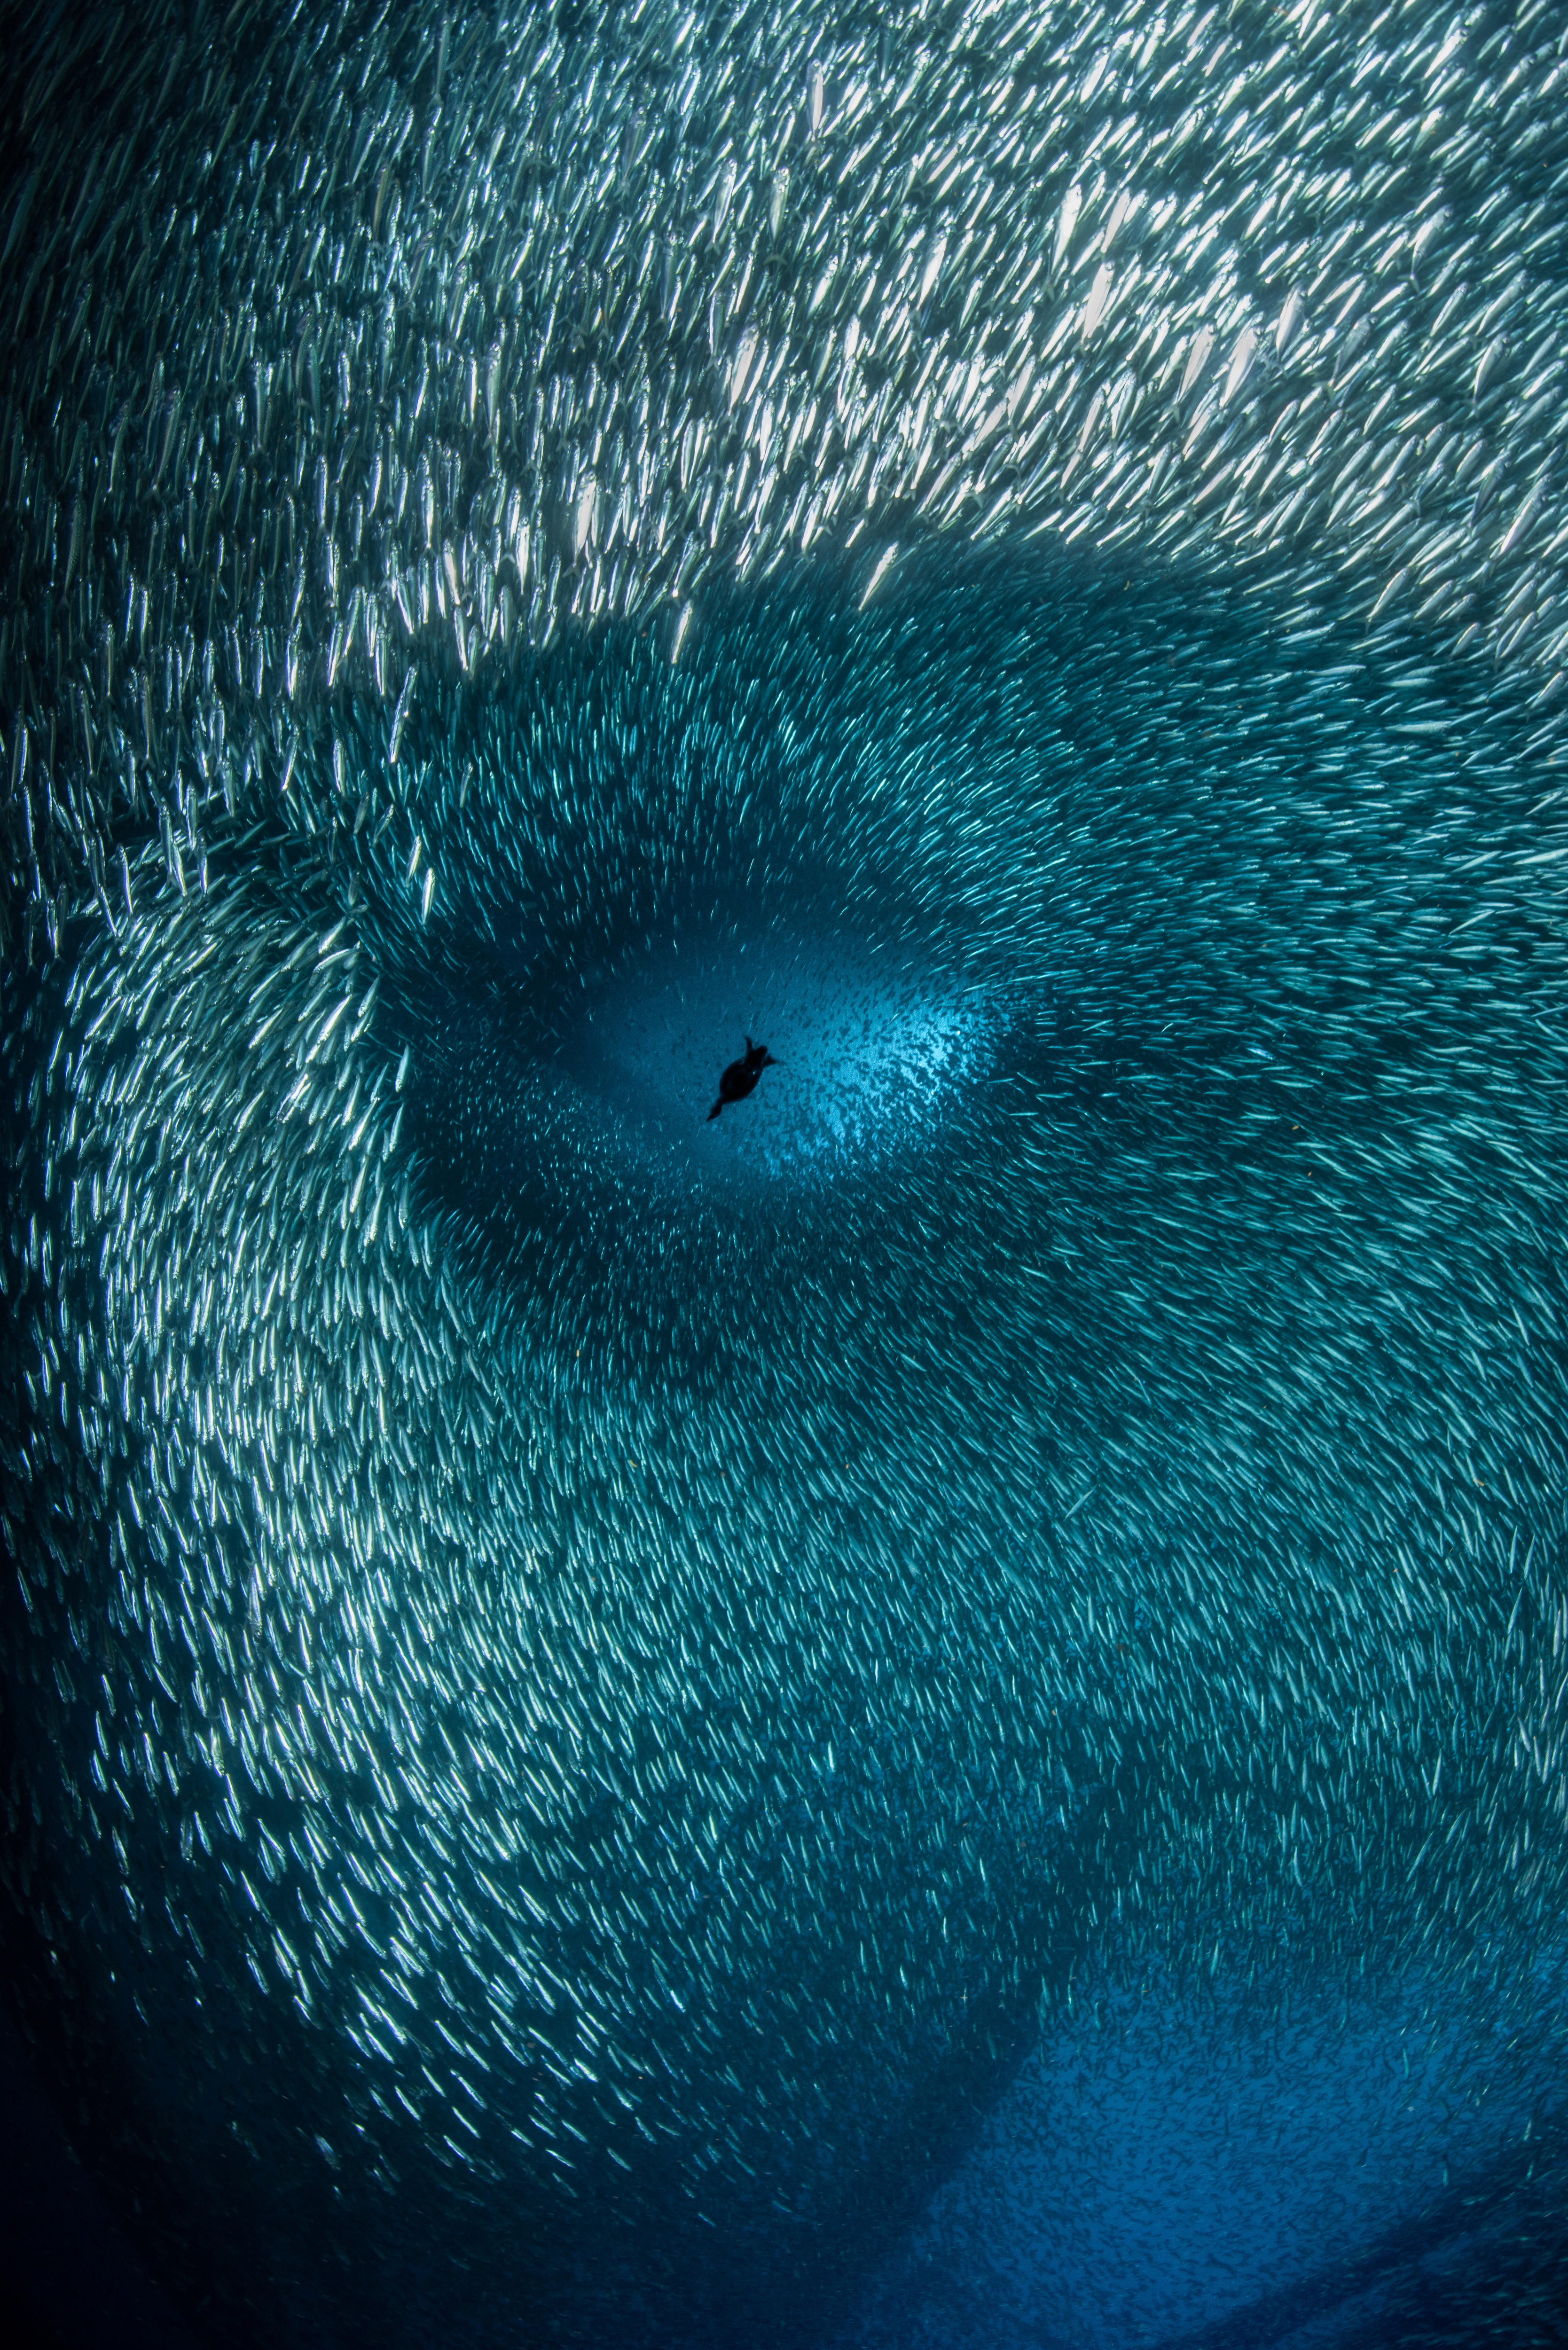 A cormorant and baitfish form the shape of a human face